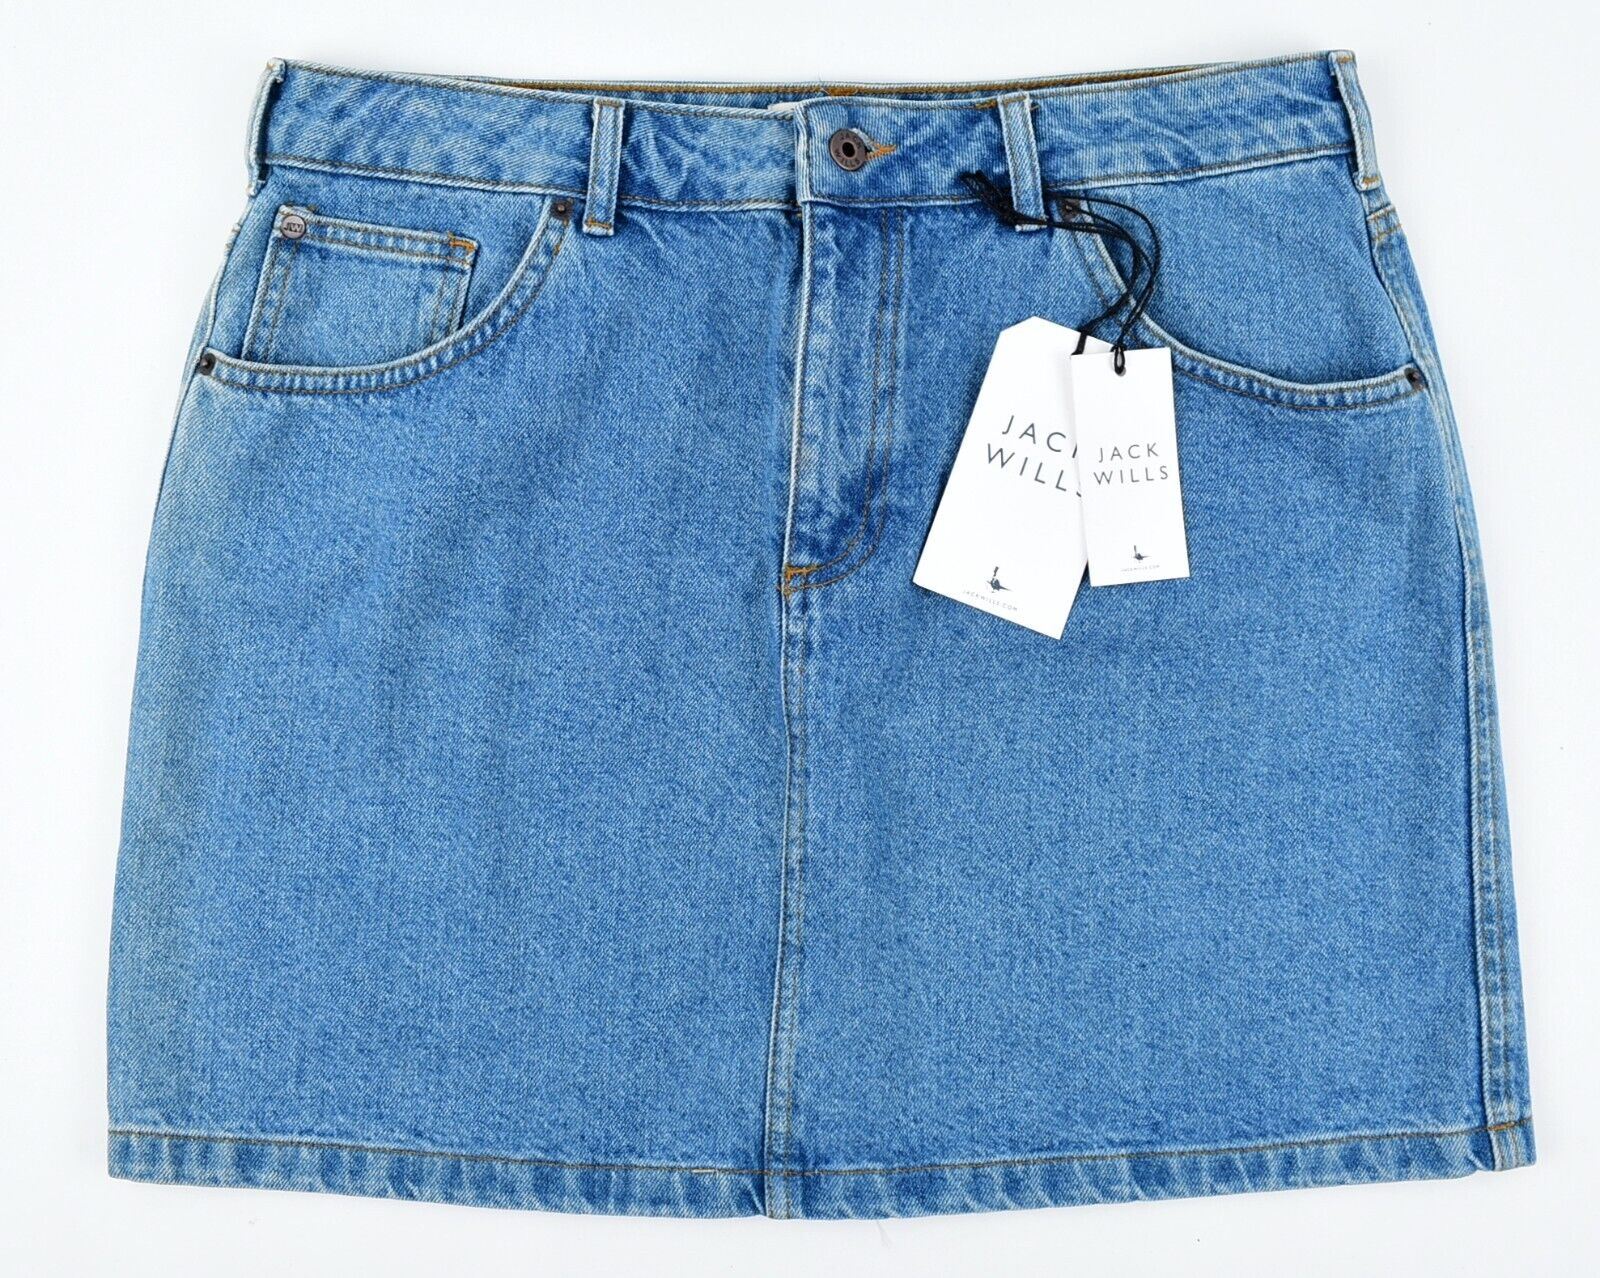 JACK WILLS Women's ROXY Denim Mini Skirt, Blue, size UK 16